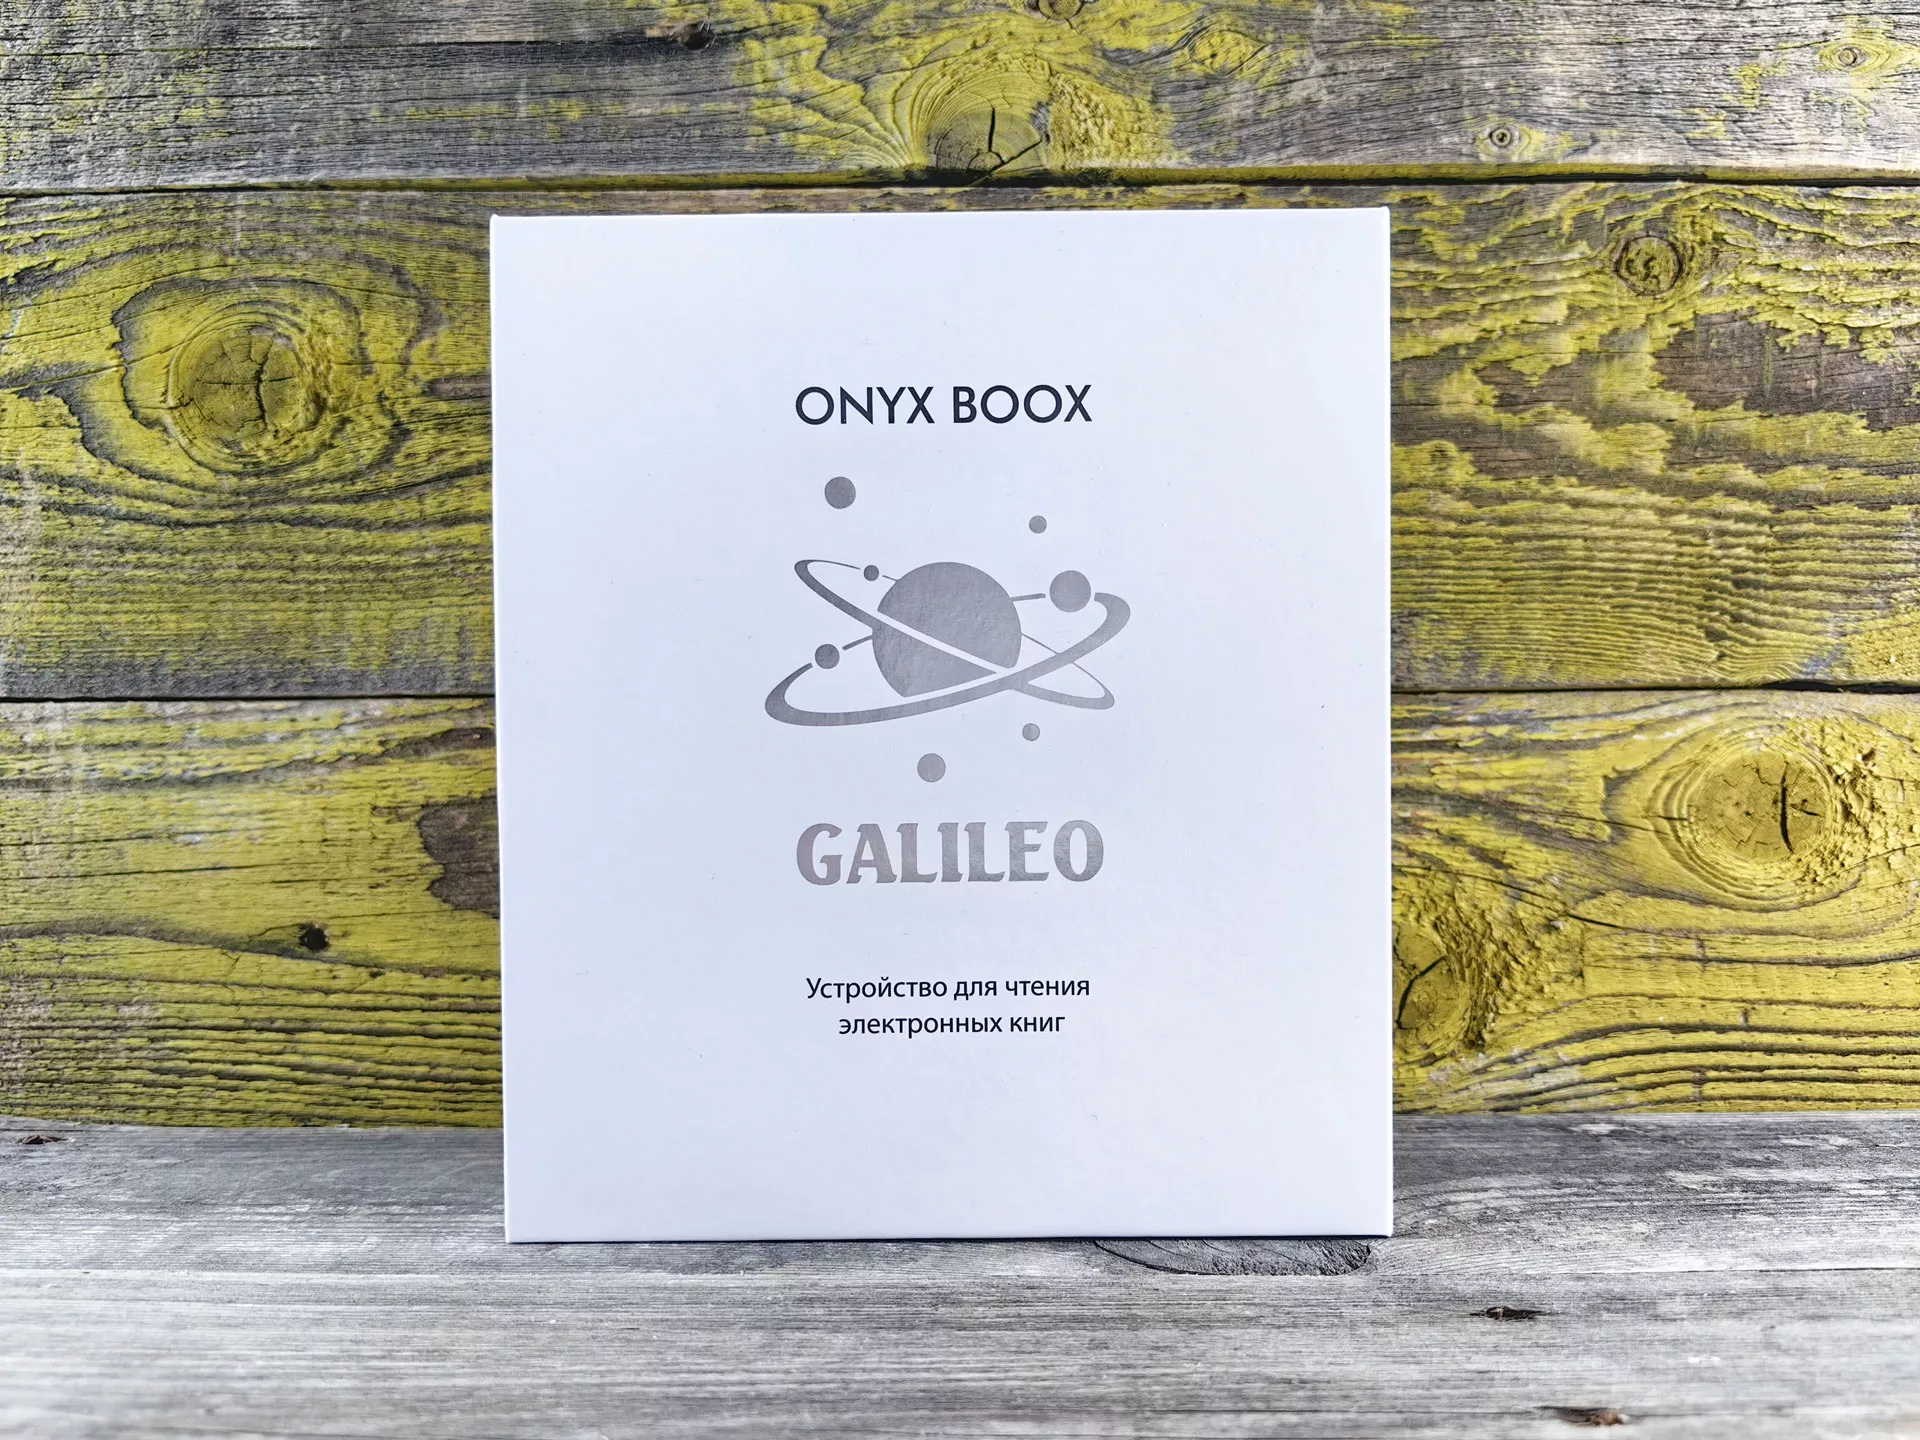 Обзор электронной книги ONYX BOOX Galileo